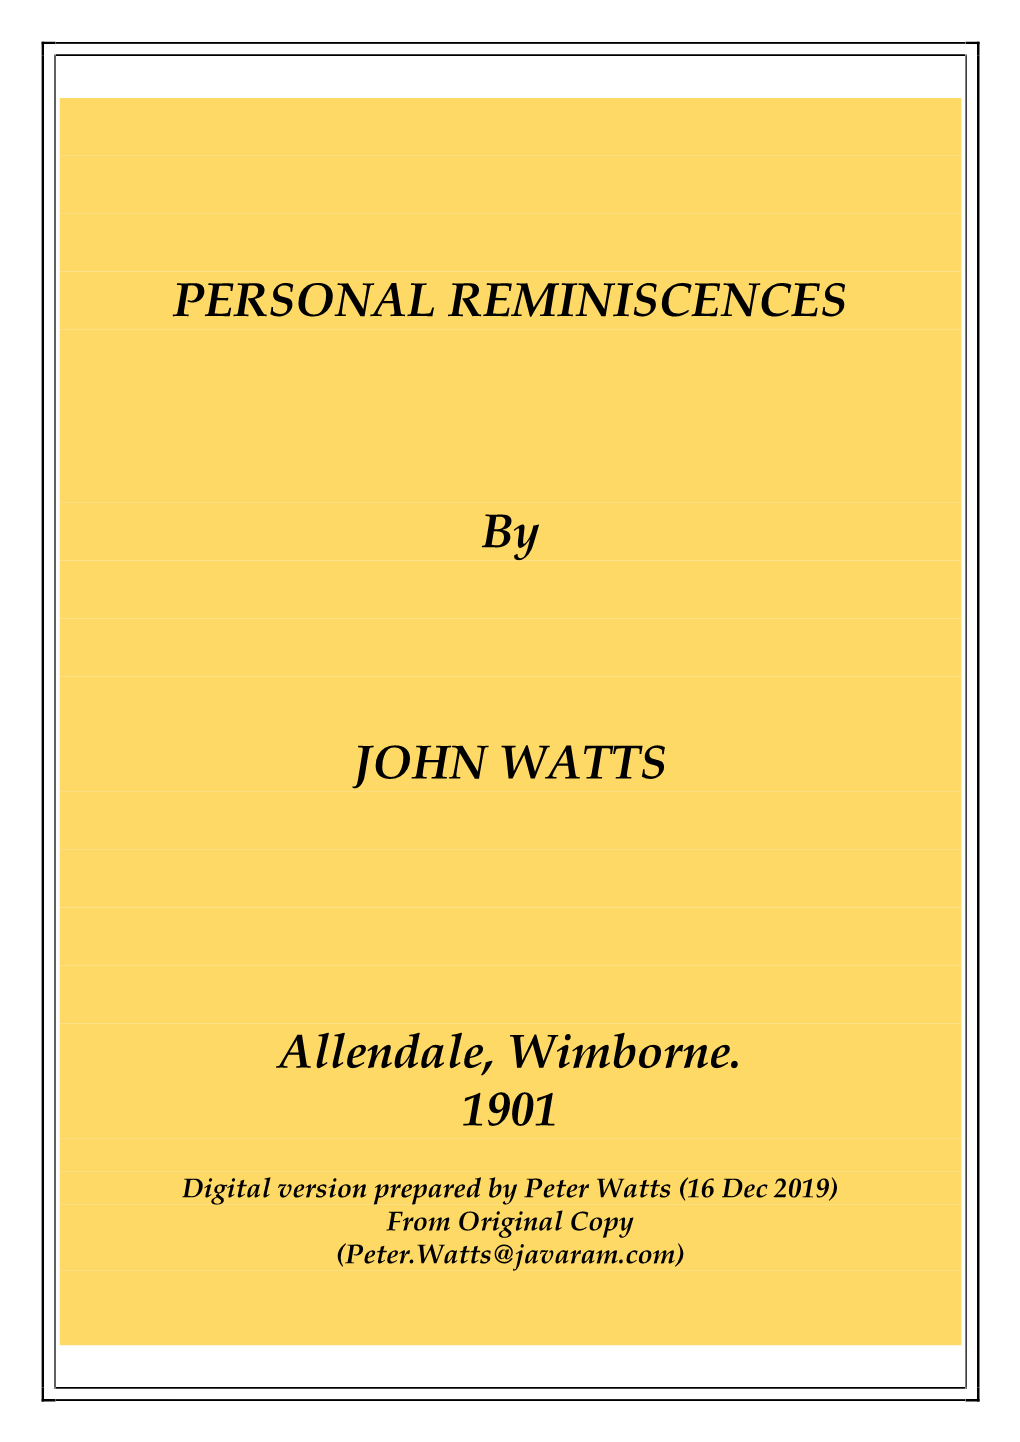 PERSONAL REMINISCENCES by JOHN WATTS Allendale, Wimborne